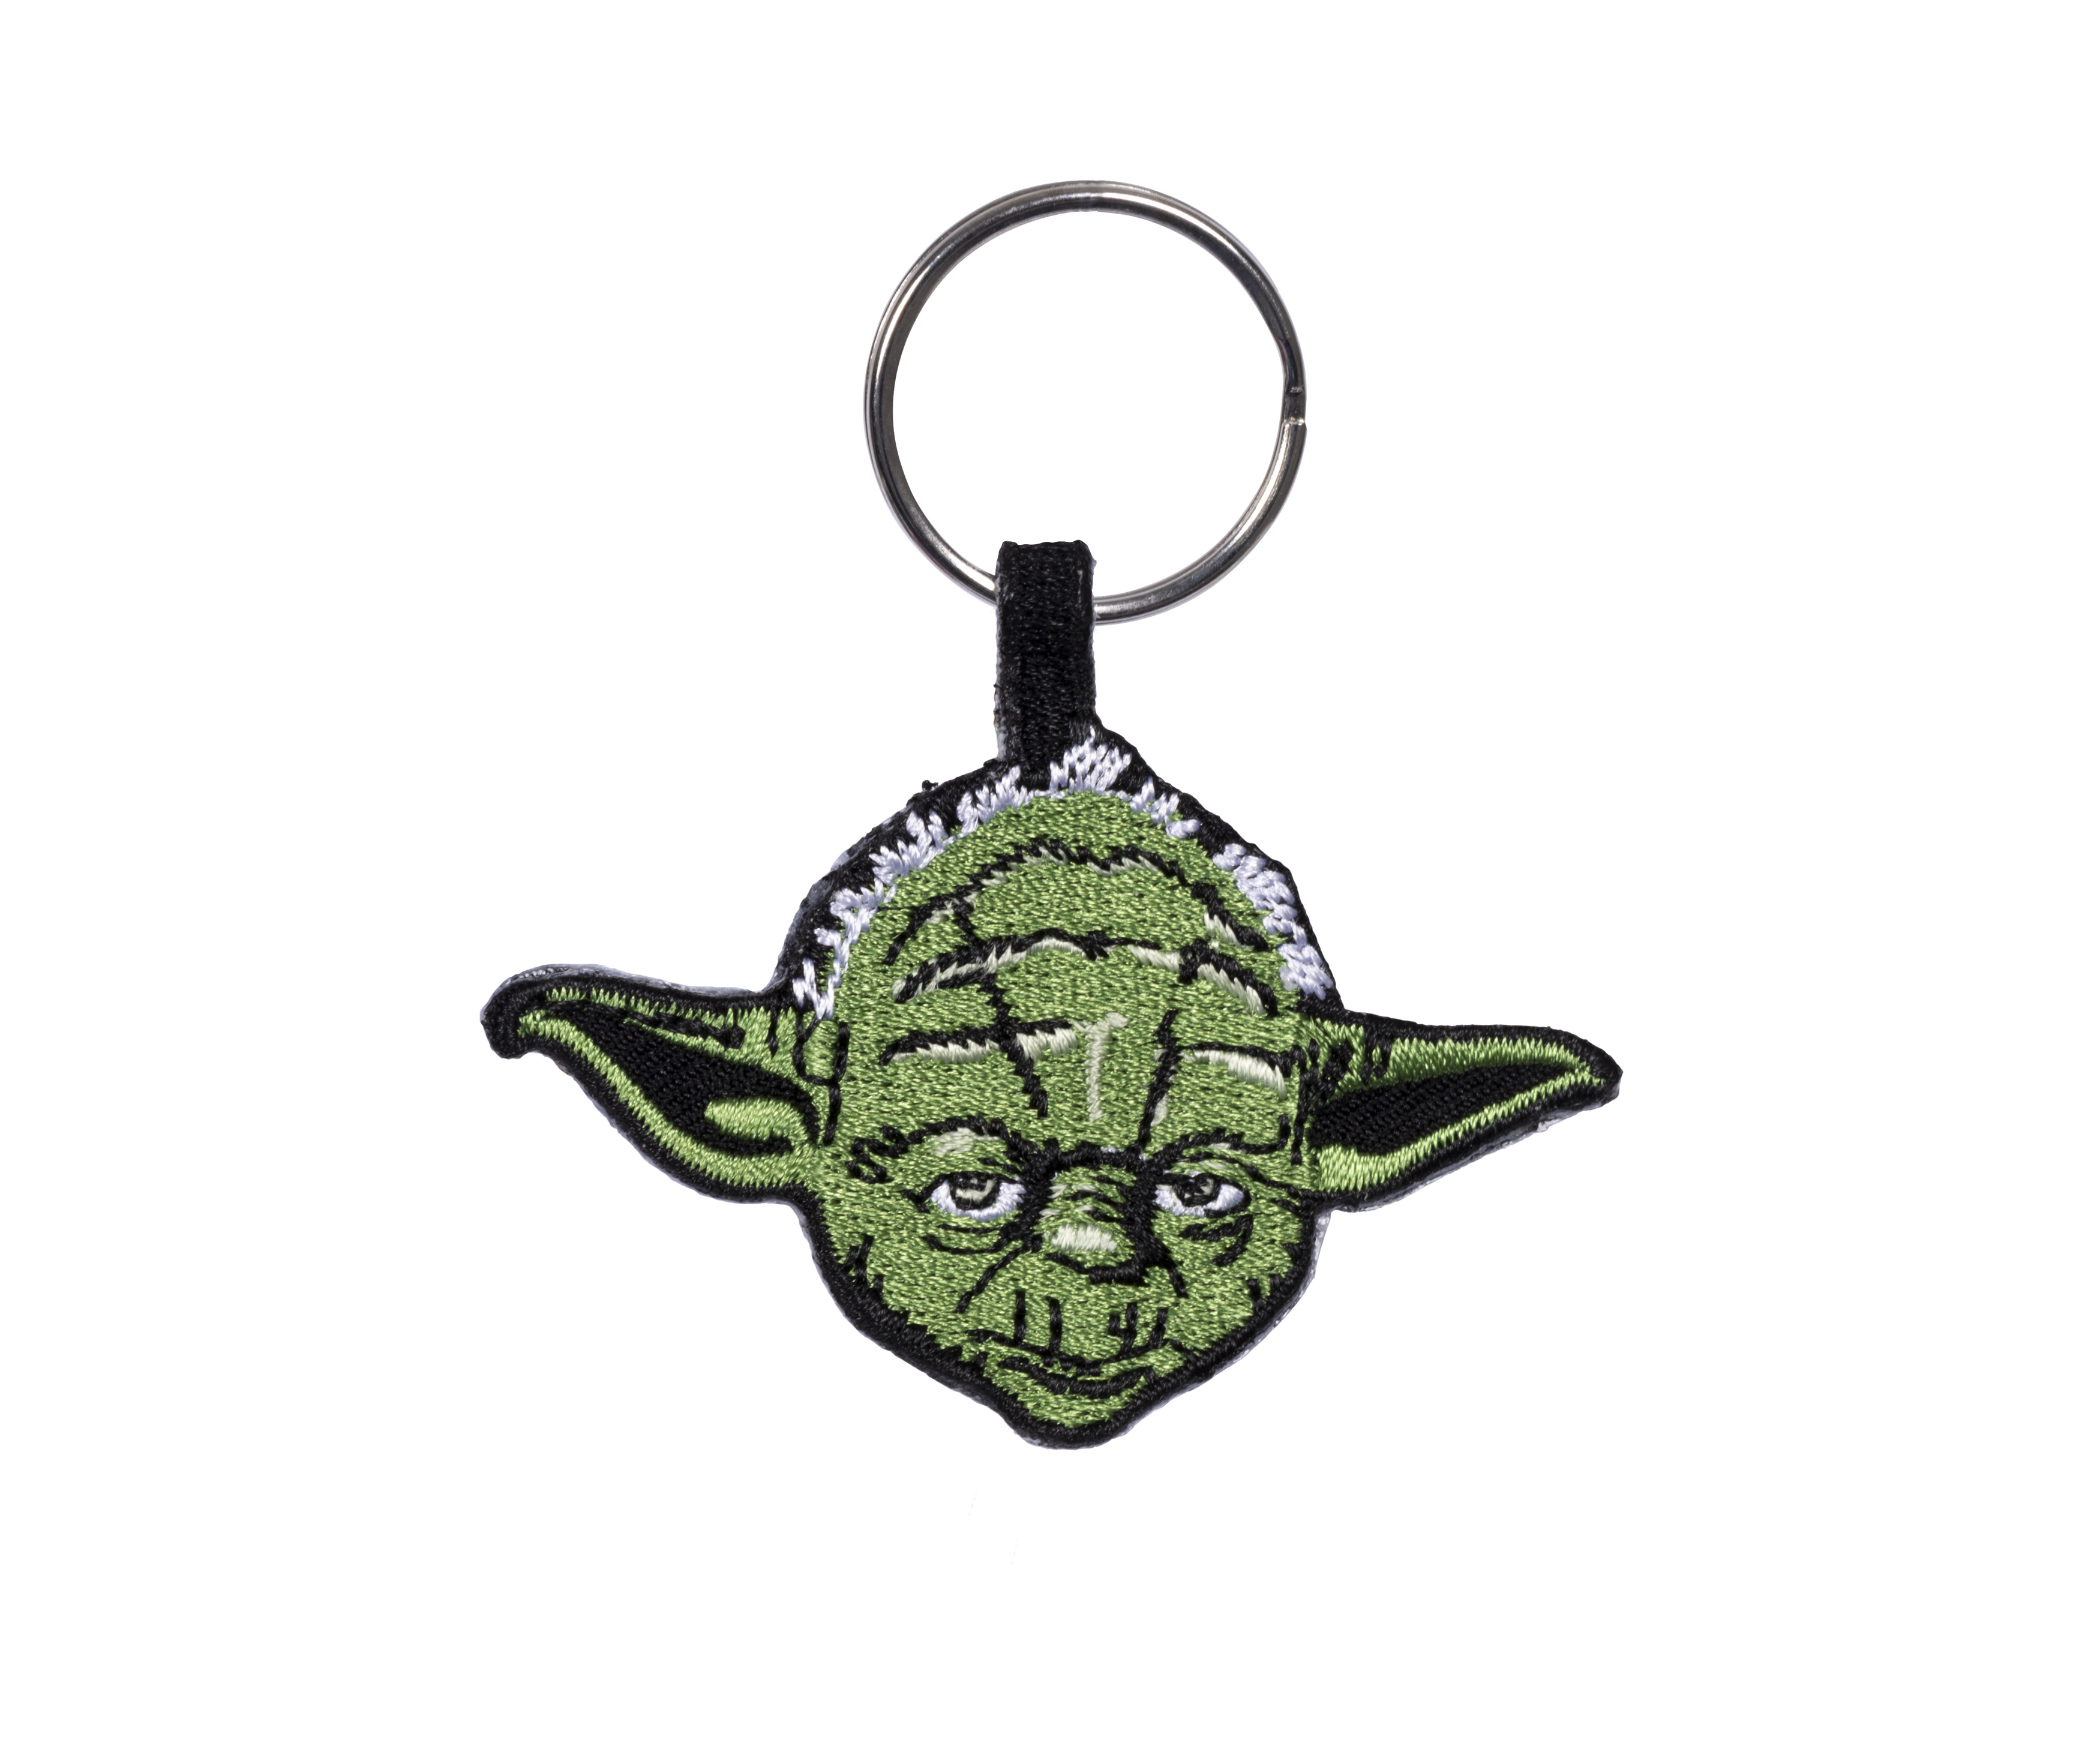 Campingtasse Set (Tasse + Schlüsselanhänger) - Yoda